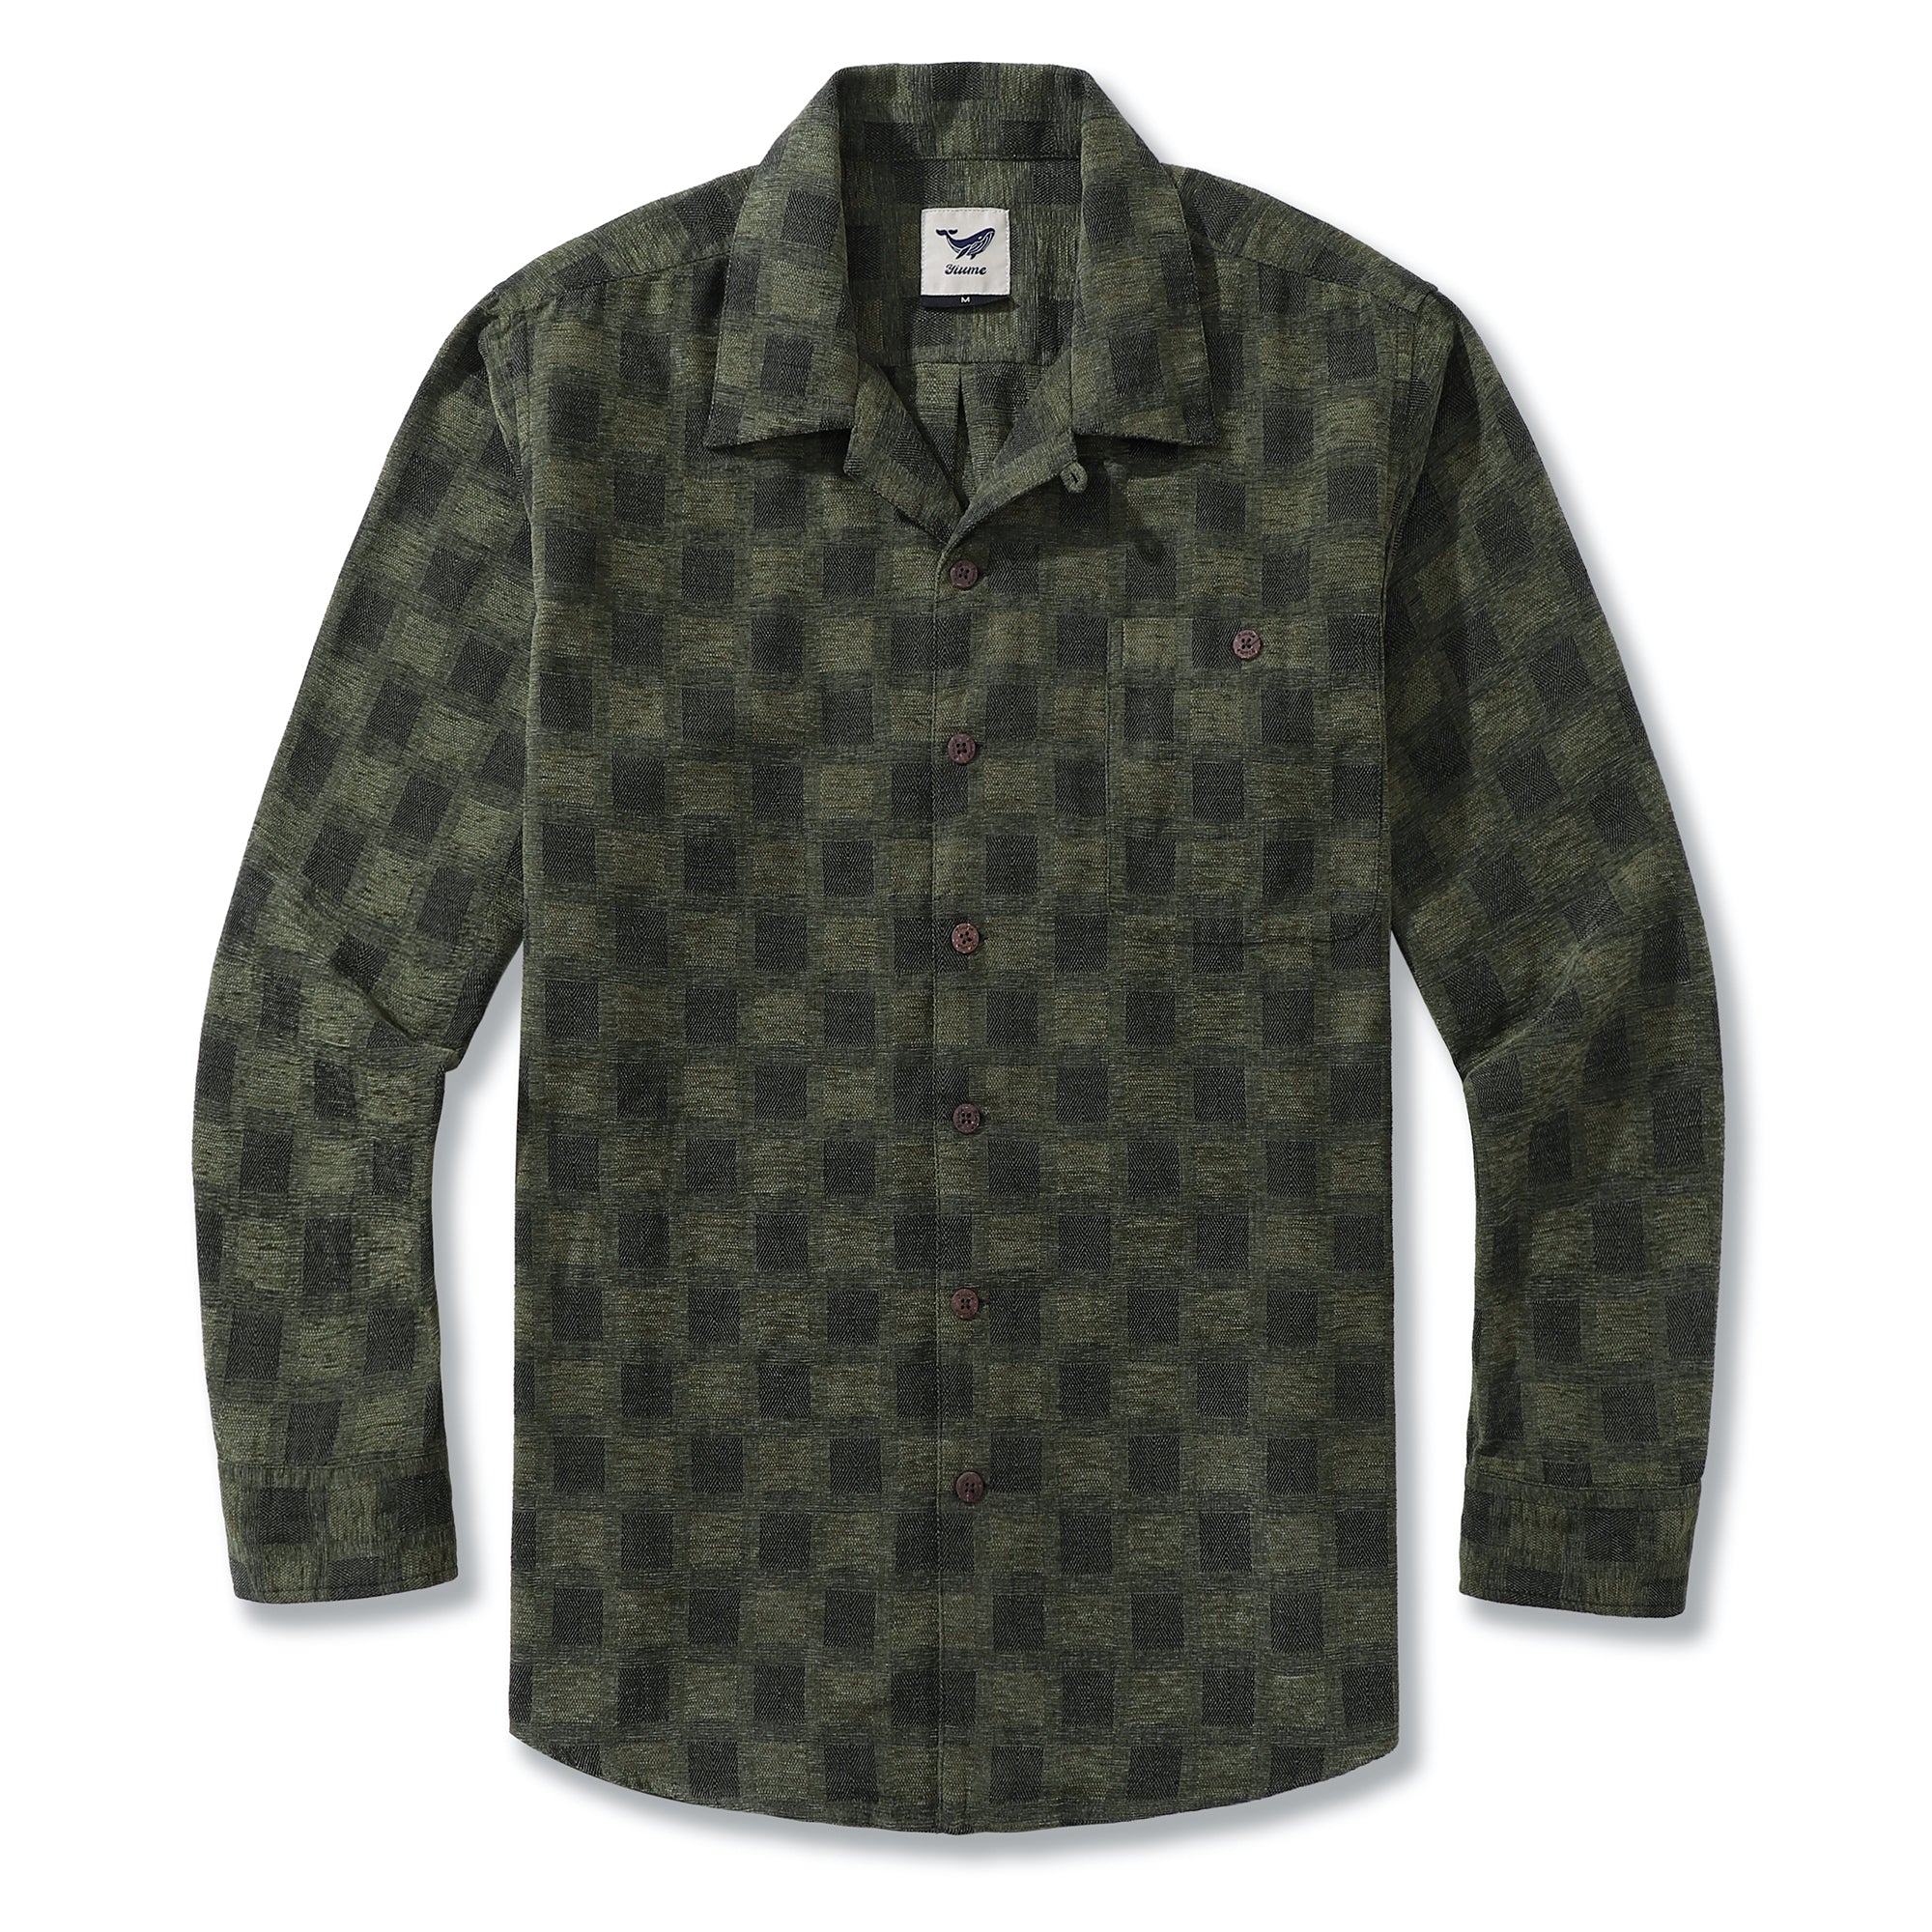 Men's Hawaiian Shirt Cotton Camp Collar Long Sleeve Classic Check Shirt - OLIVE GREEN